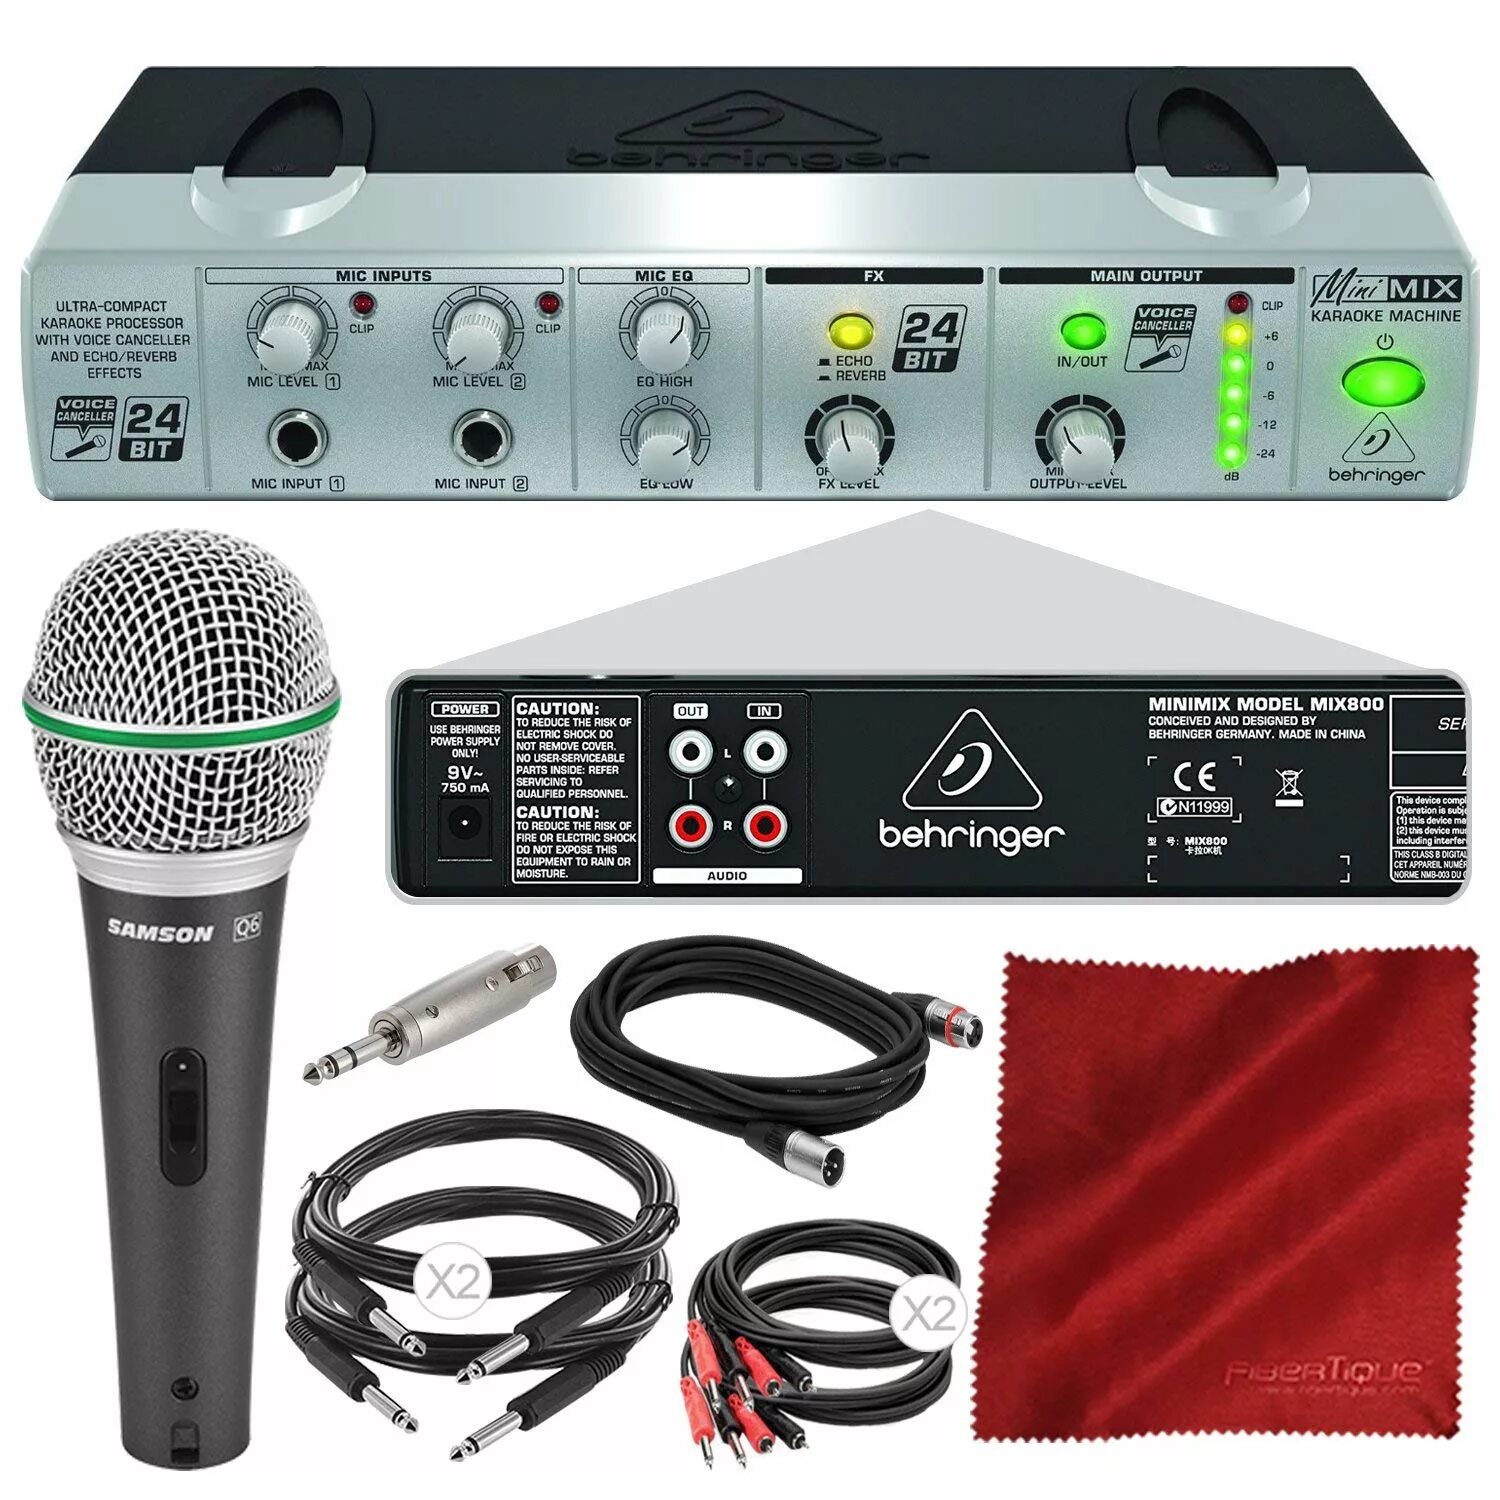 Рейтинг караоке колонок. Микрофон Behringer с-4. Behringer Minimix mix800 Ultra-Compact Karaoke Machine with Voice Canceller and FX. Микрофон парный Behringer. EW-800 караоке.